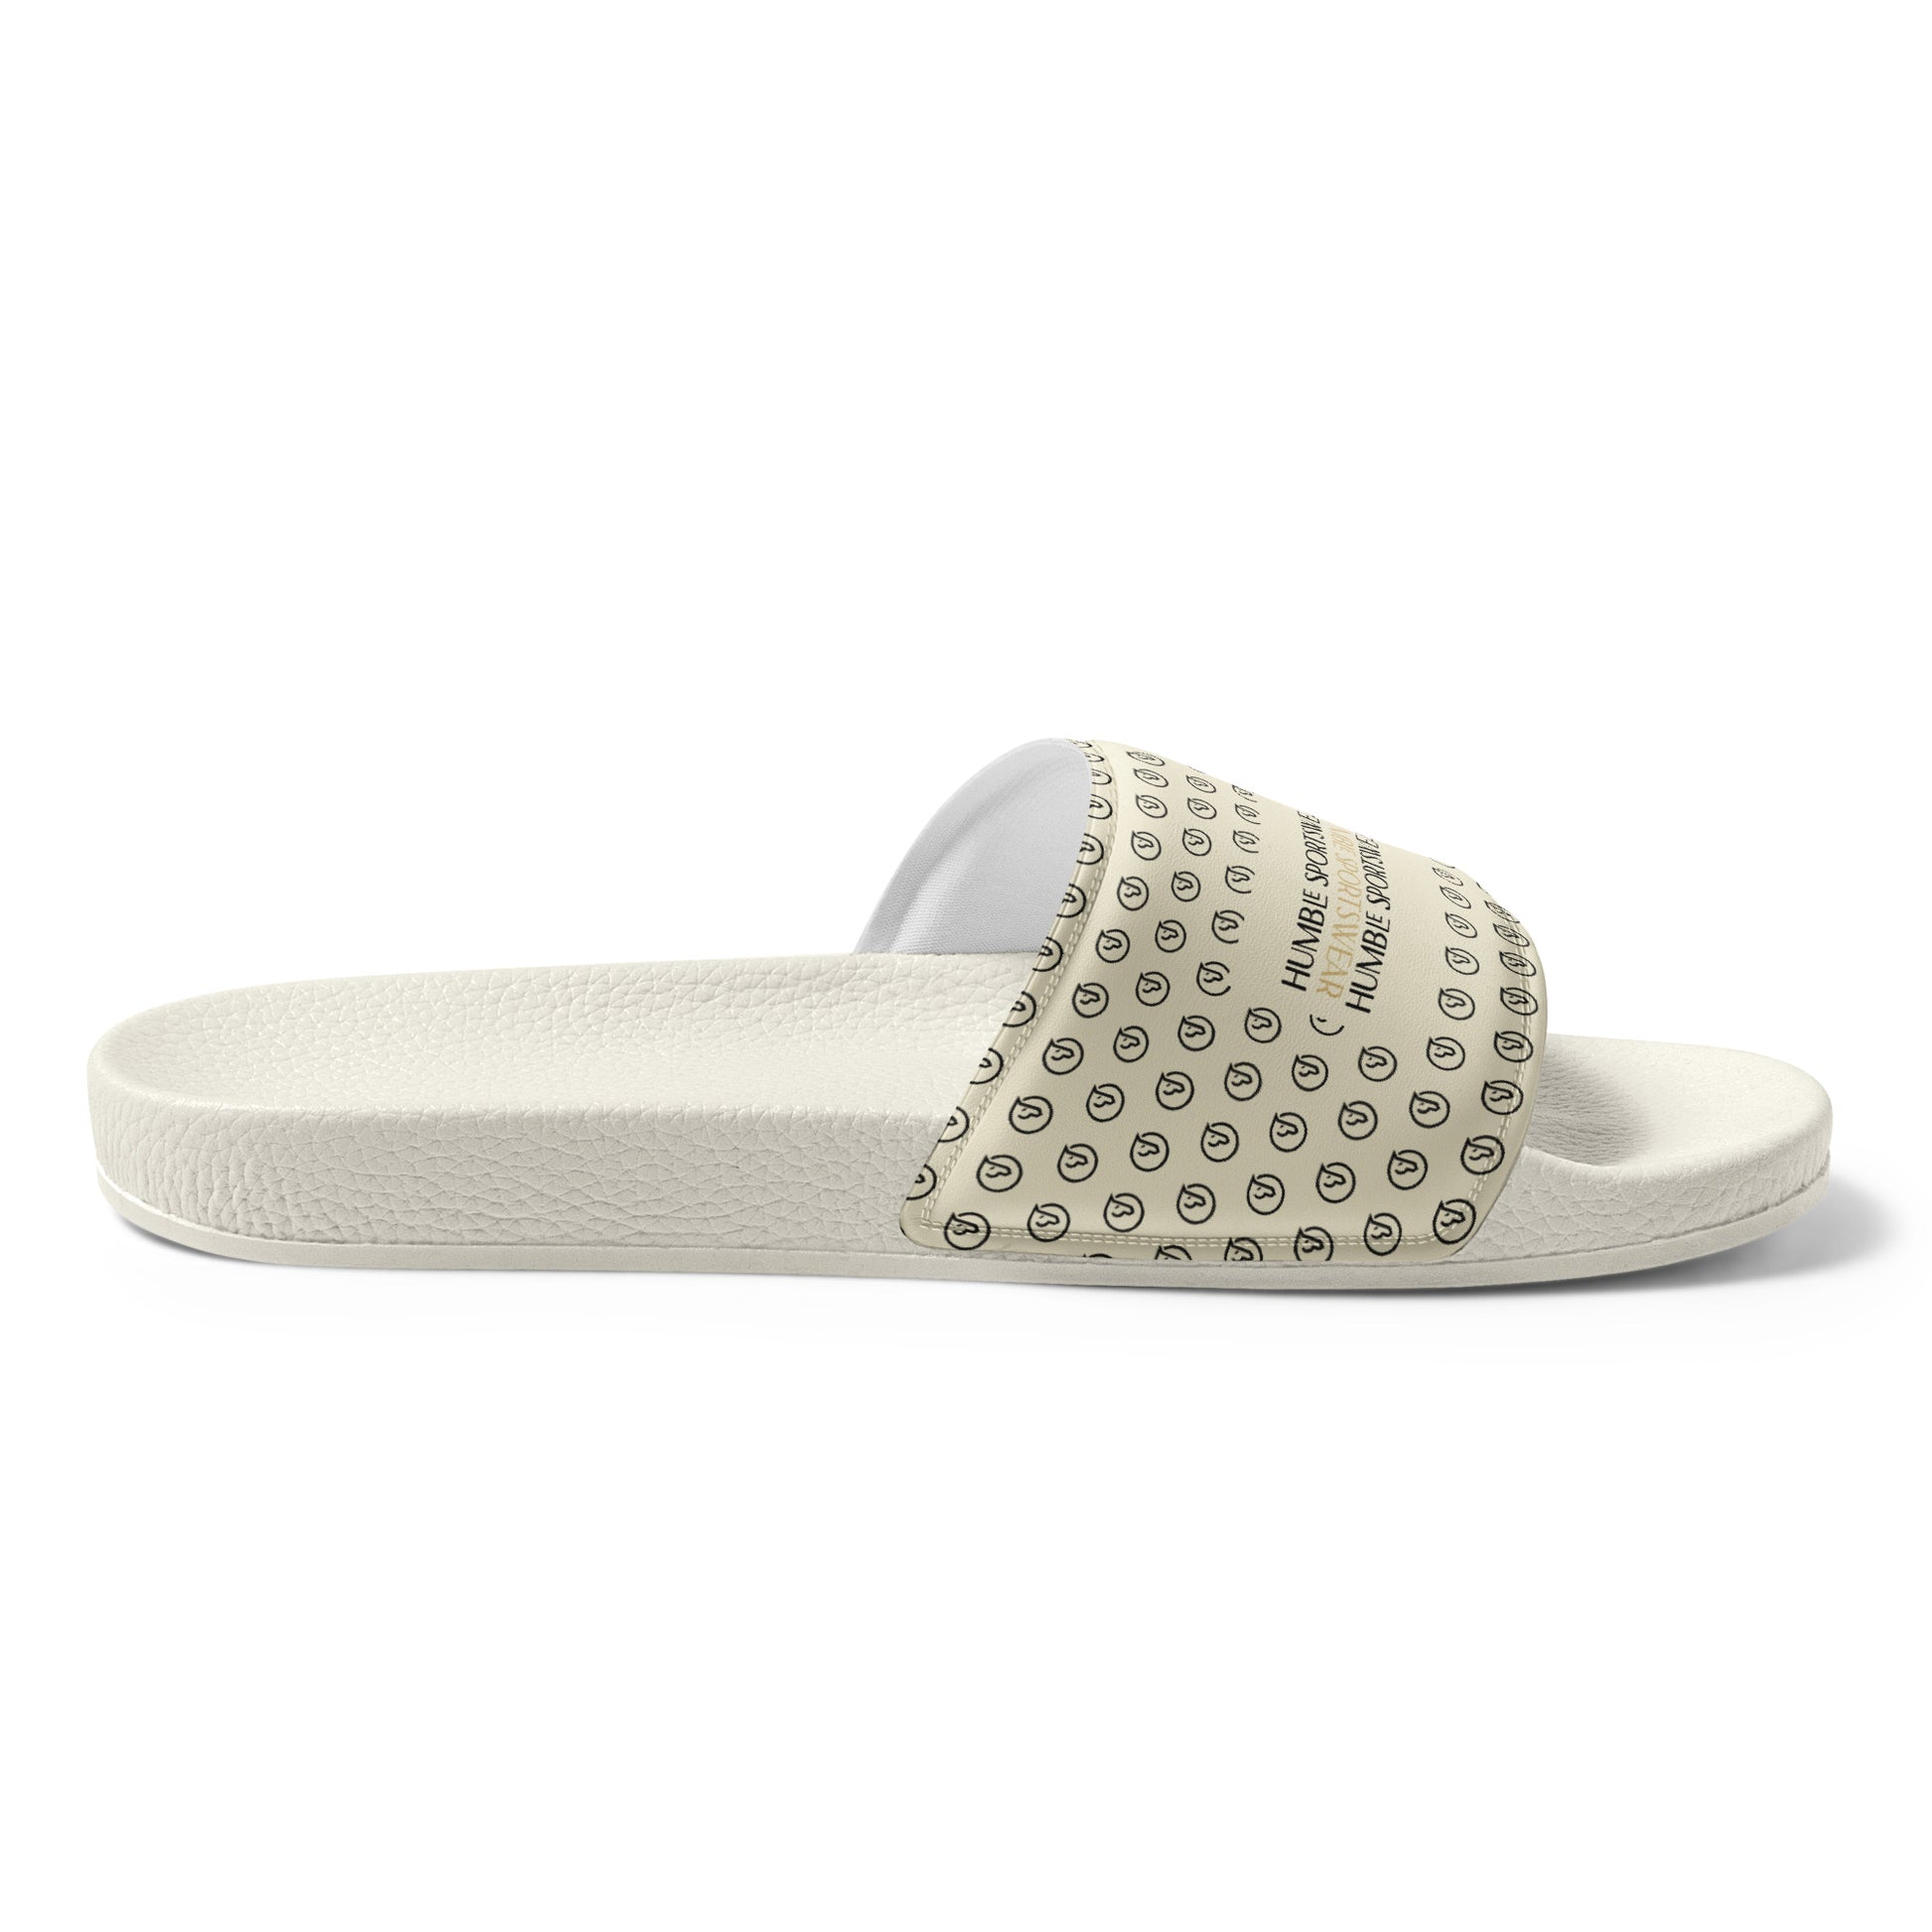 Humble Sportswear, men's Color Match casual neutral tone slip-on slides sandals 